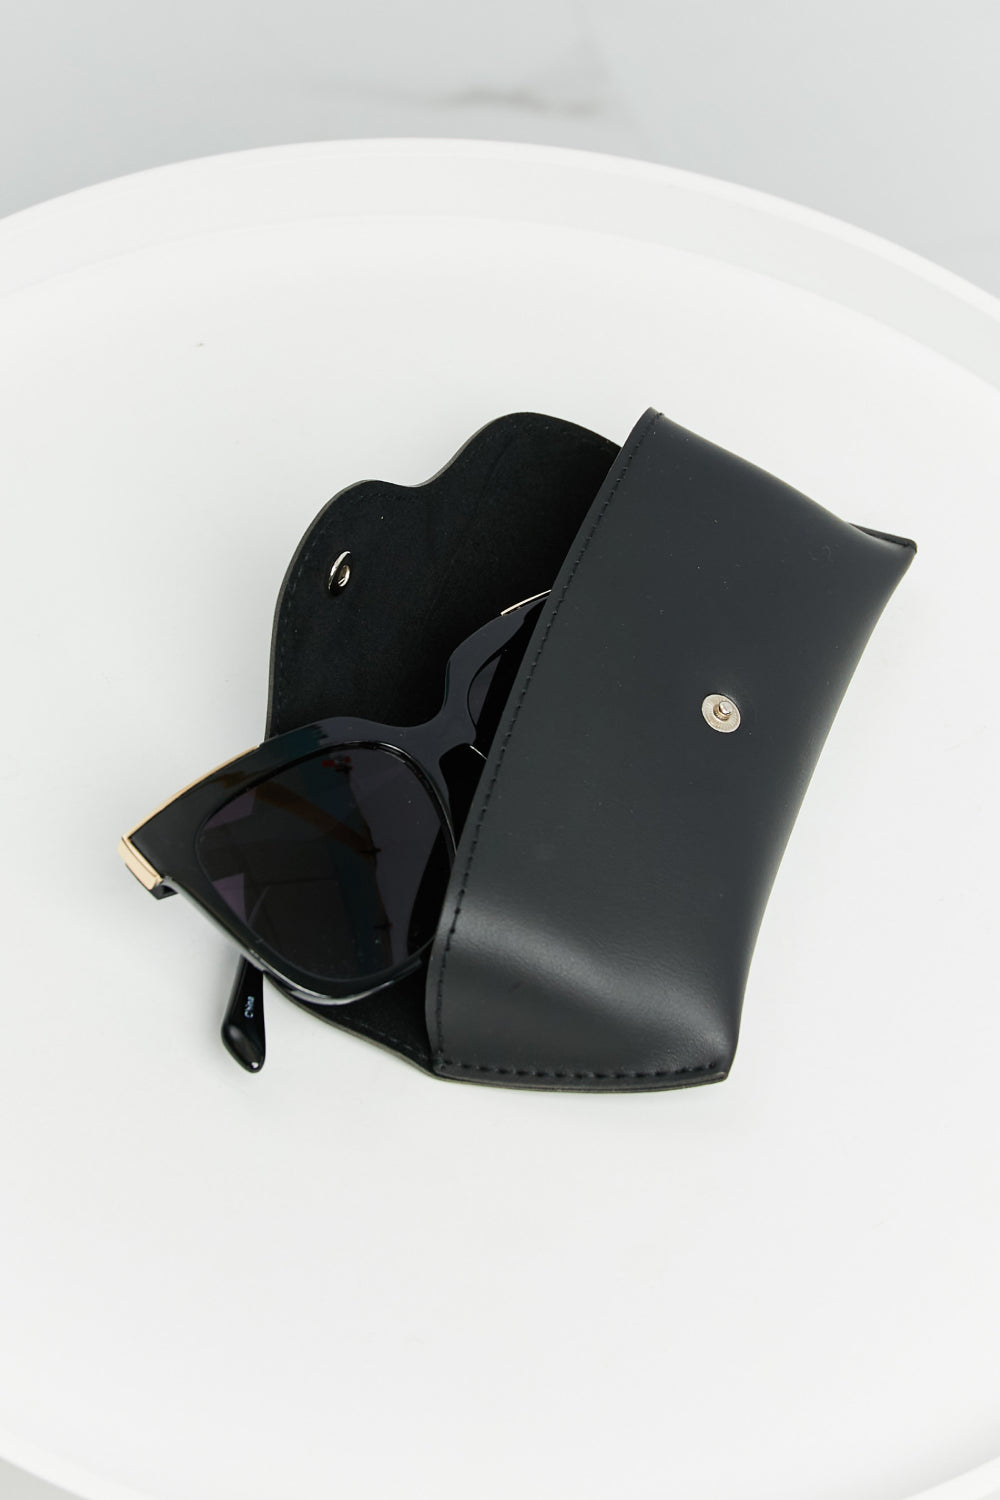 Oval Full Rim Sunglasses - Tigbul's Fashion